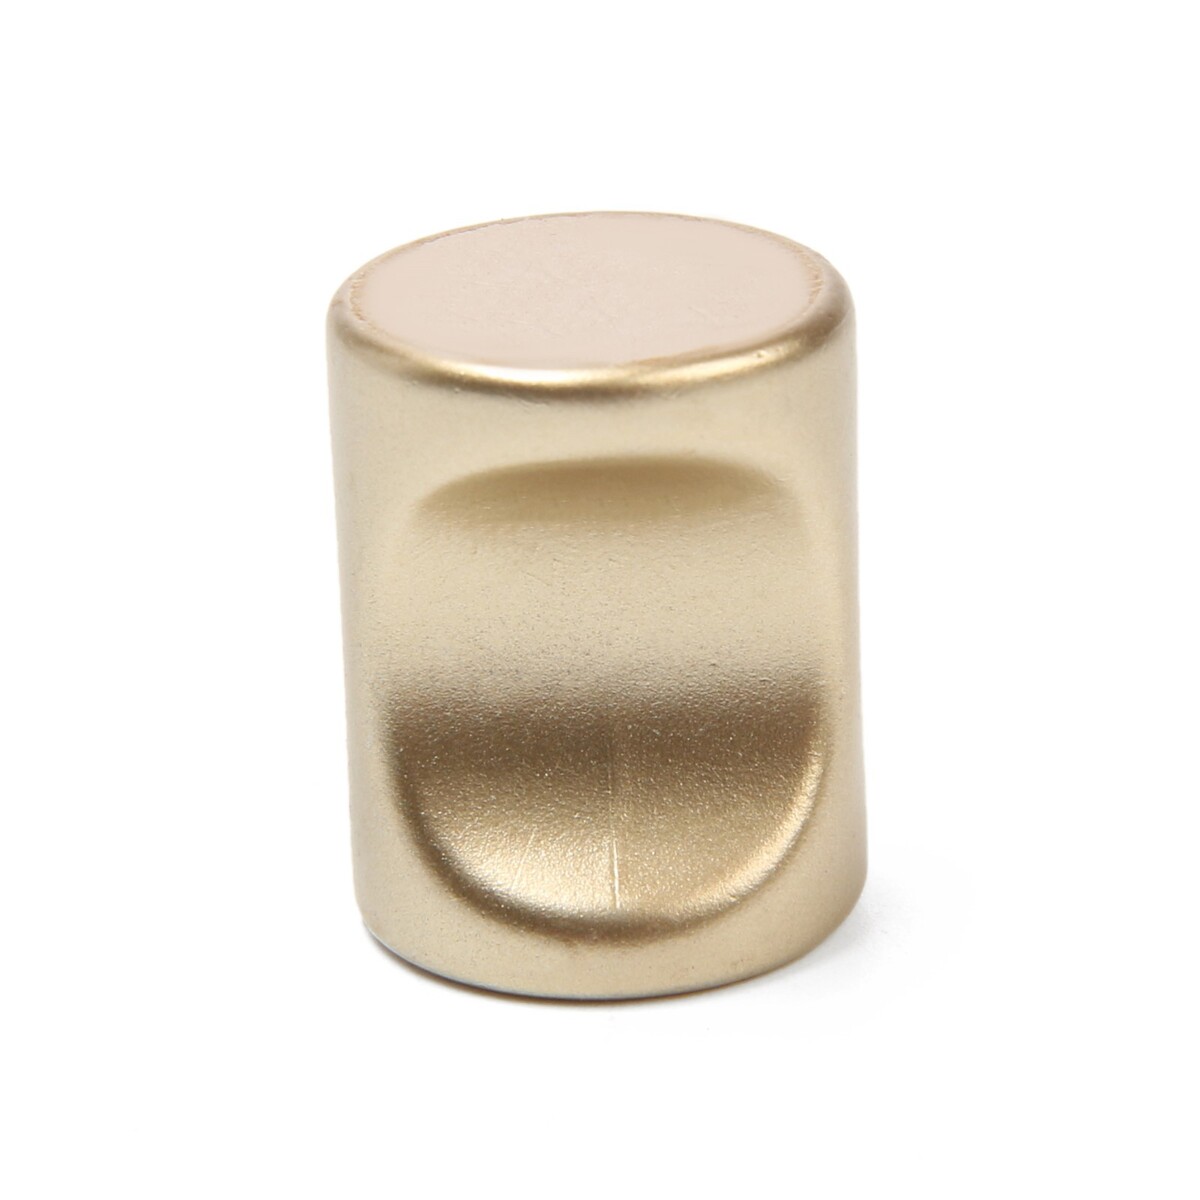 Ручка-кнопка cappio, рк102, d=18 мм, пластик, цвет матовое золото фиксатор аллюр bk s1 sb pb 4176 11 455 матовое золото золото